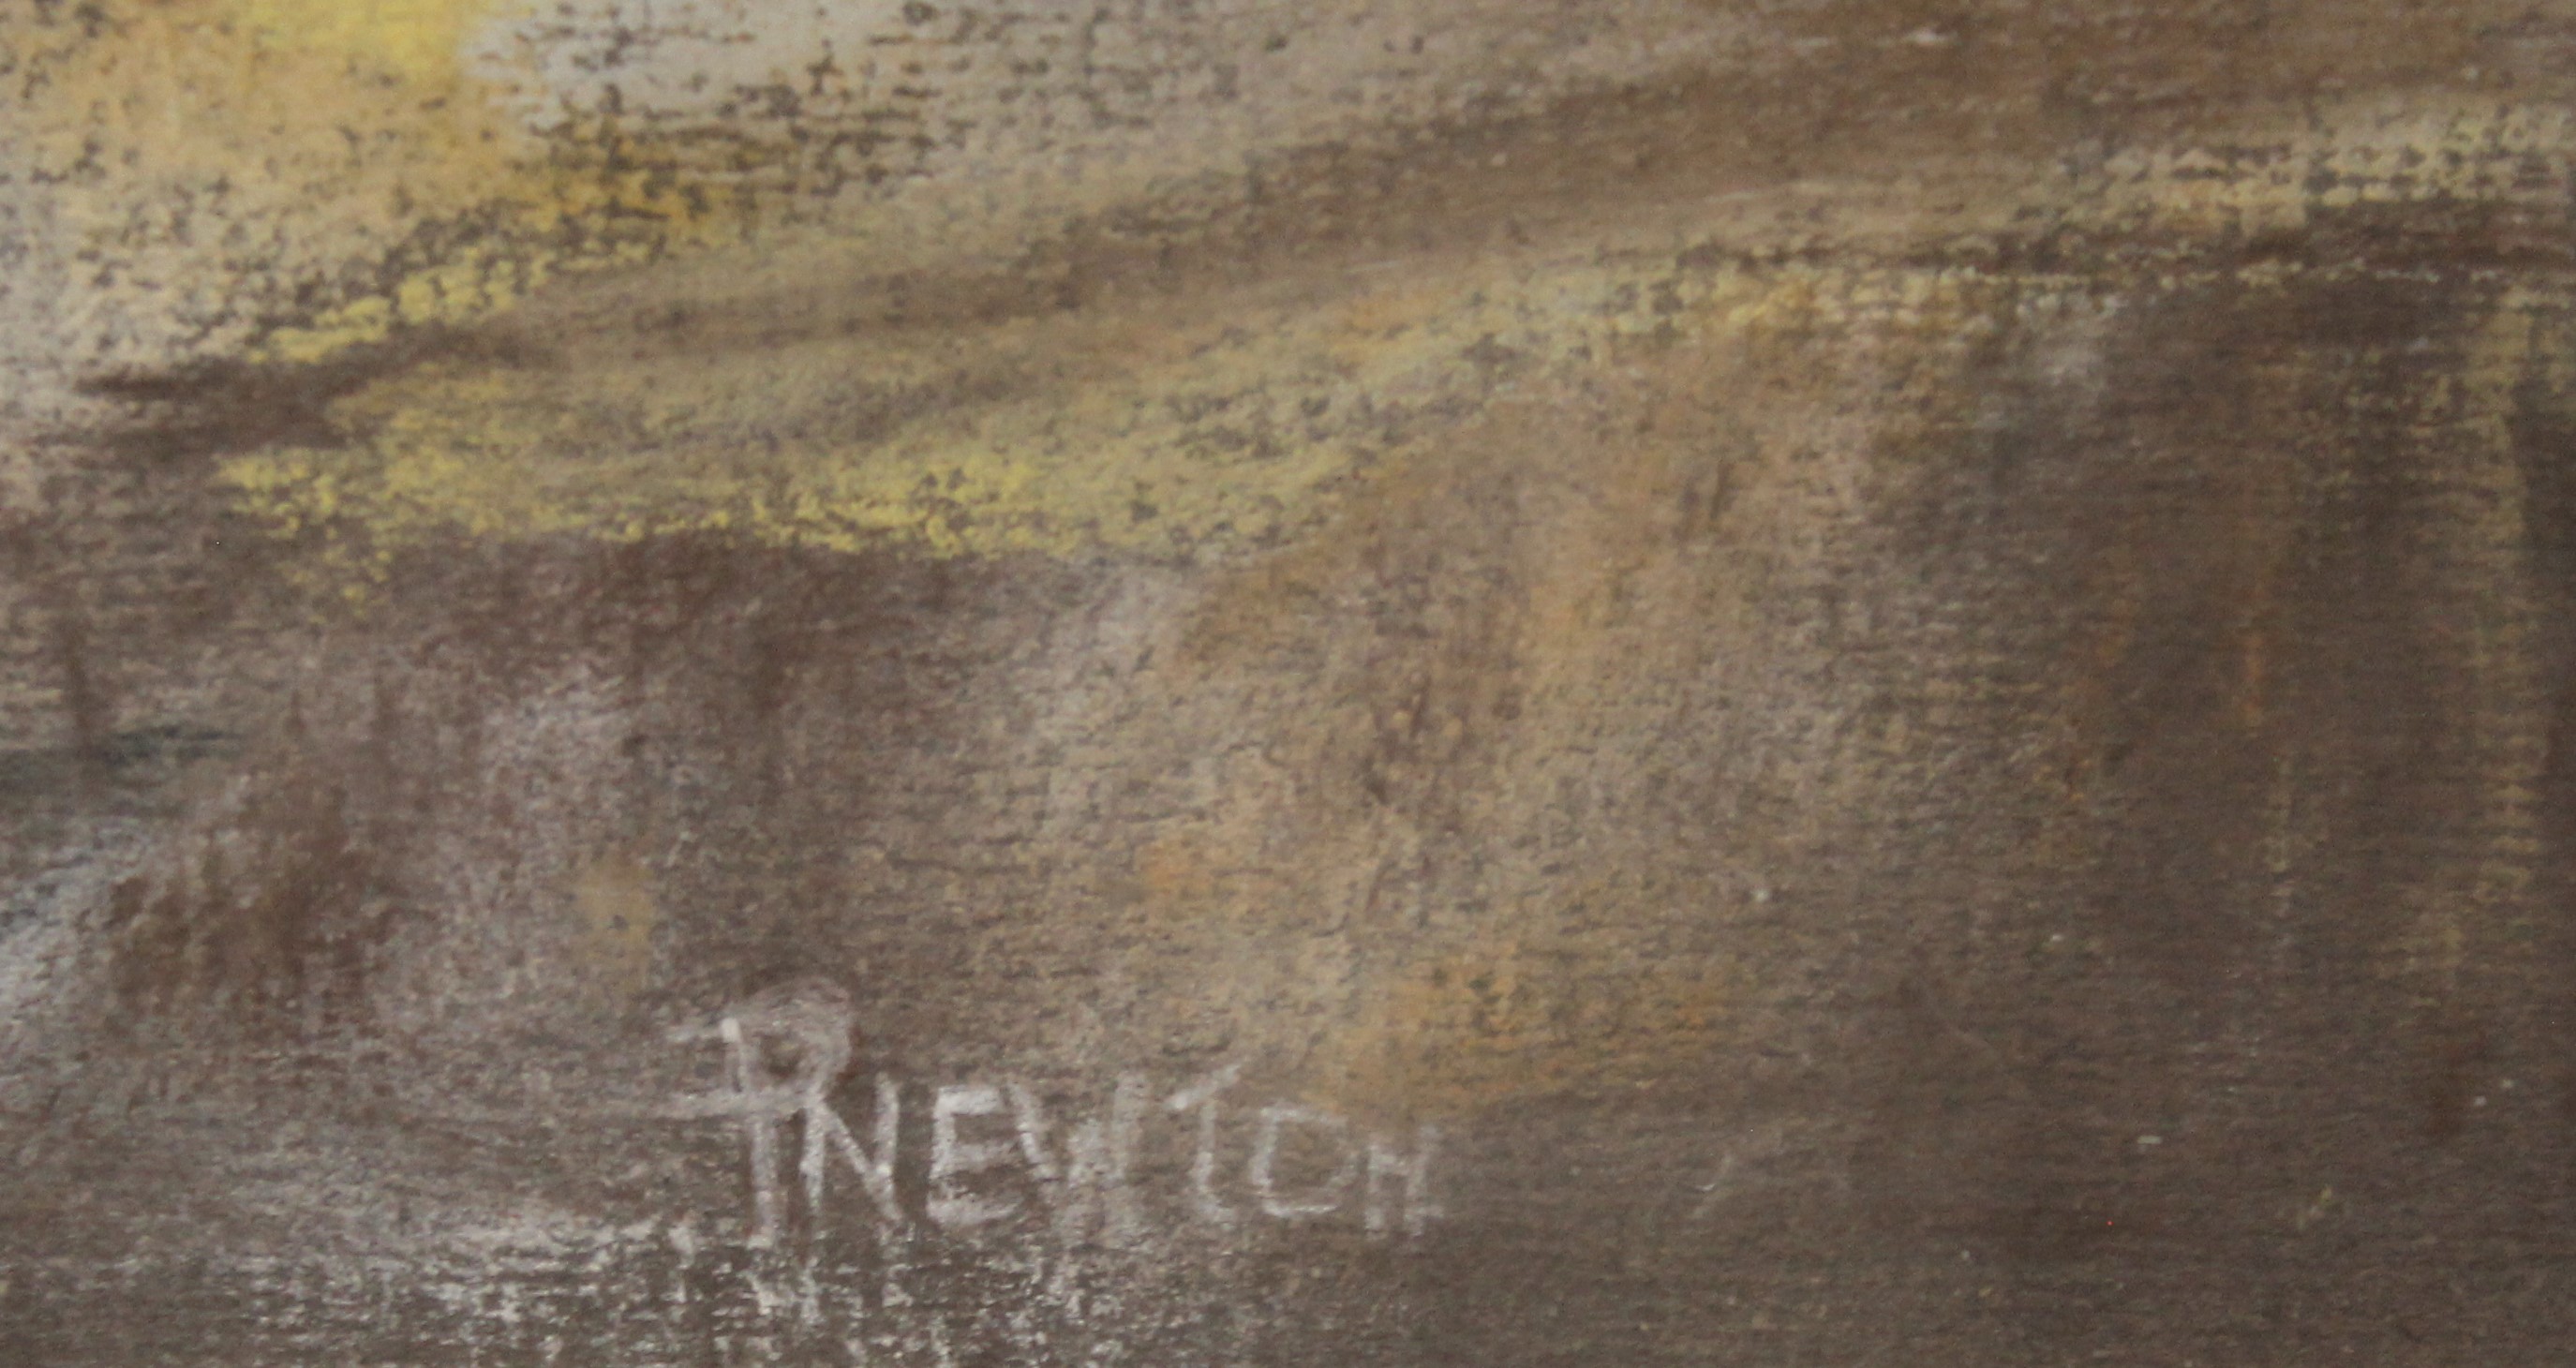 P NEWTON, Waiting for Dinner, pastel, signed, framed and glazed. 43 x 29 cm. - Image 3 of 3